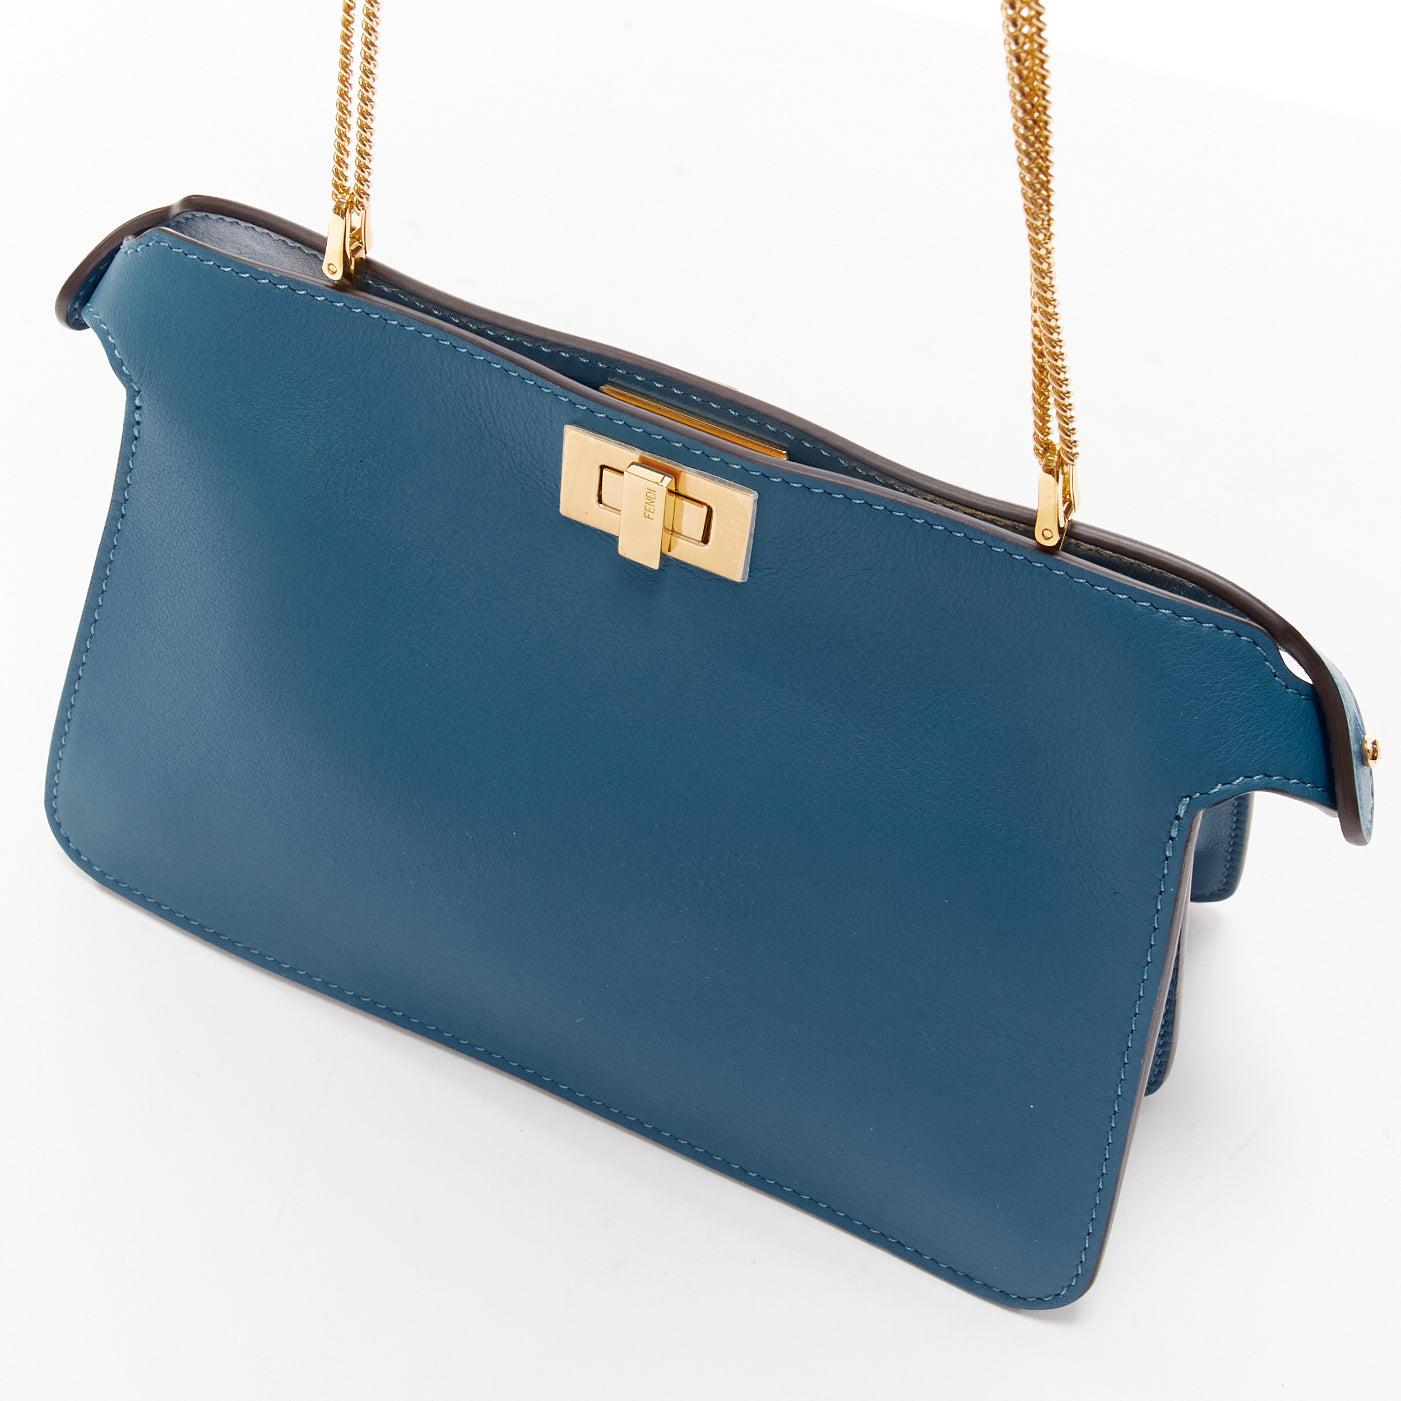 FENDI Peekaboo pink lace applique blue leather gold buckle crossbody bag For Sale 4